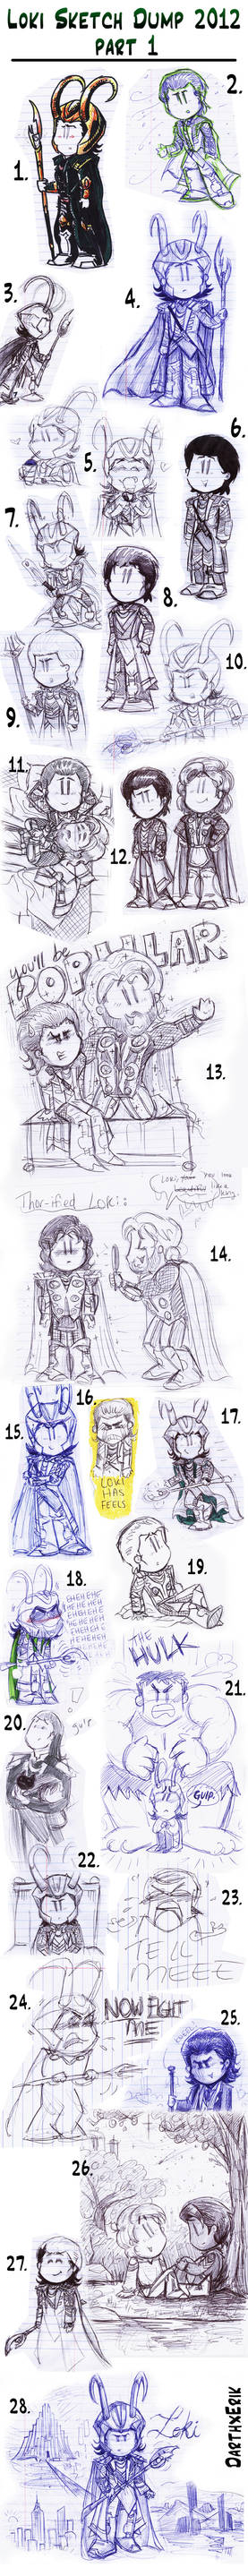 Loki Sketch Dump 2012 part 1